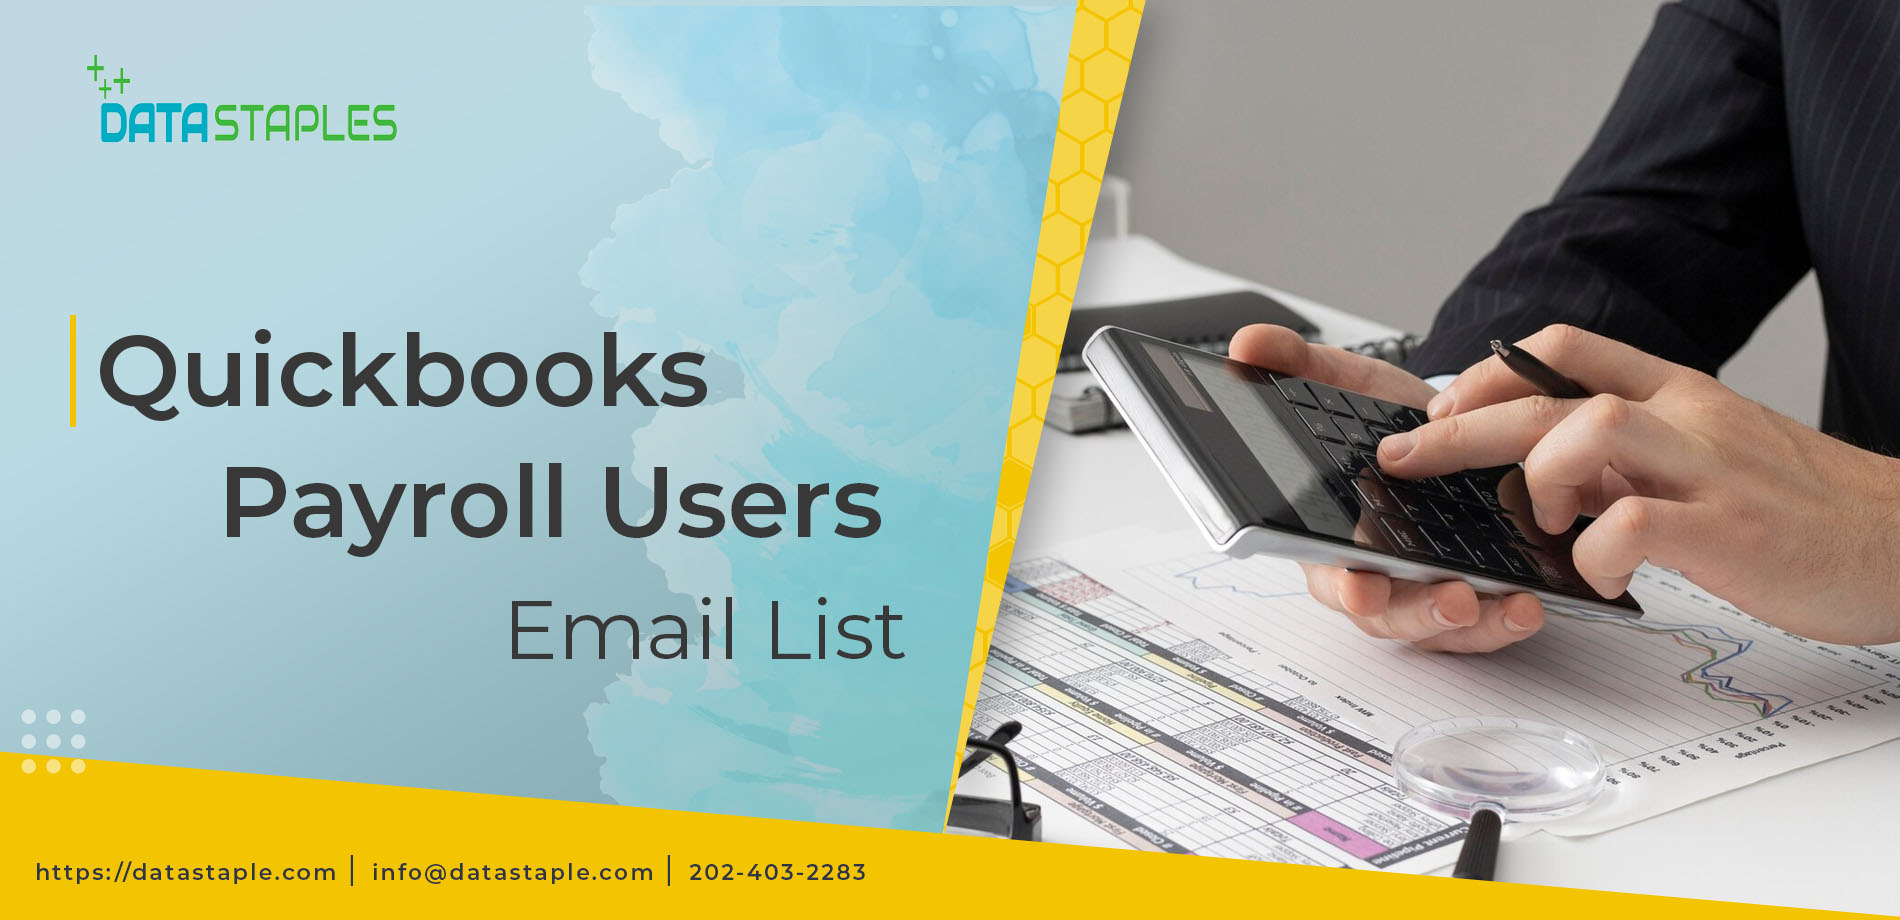 QuickBooks Payroll Users Email List | DataStaples